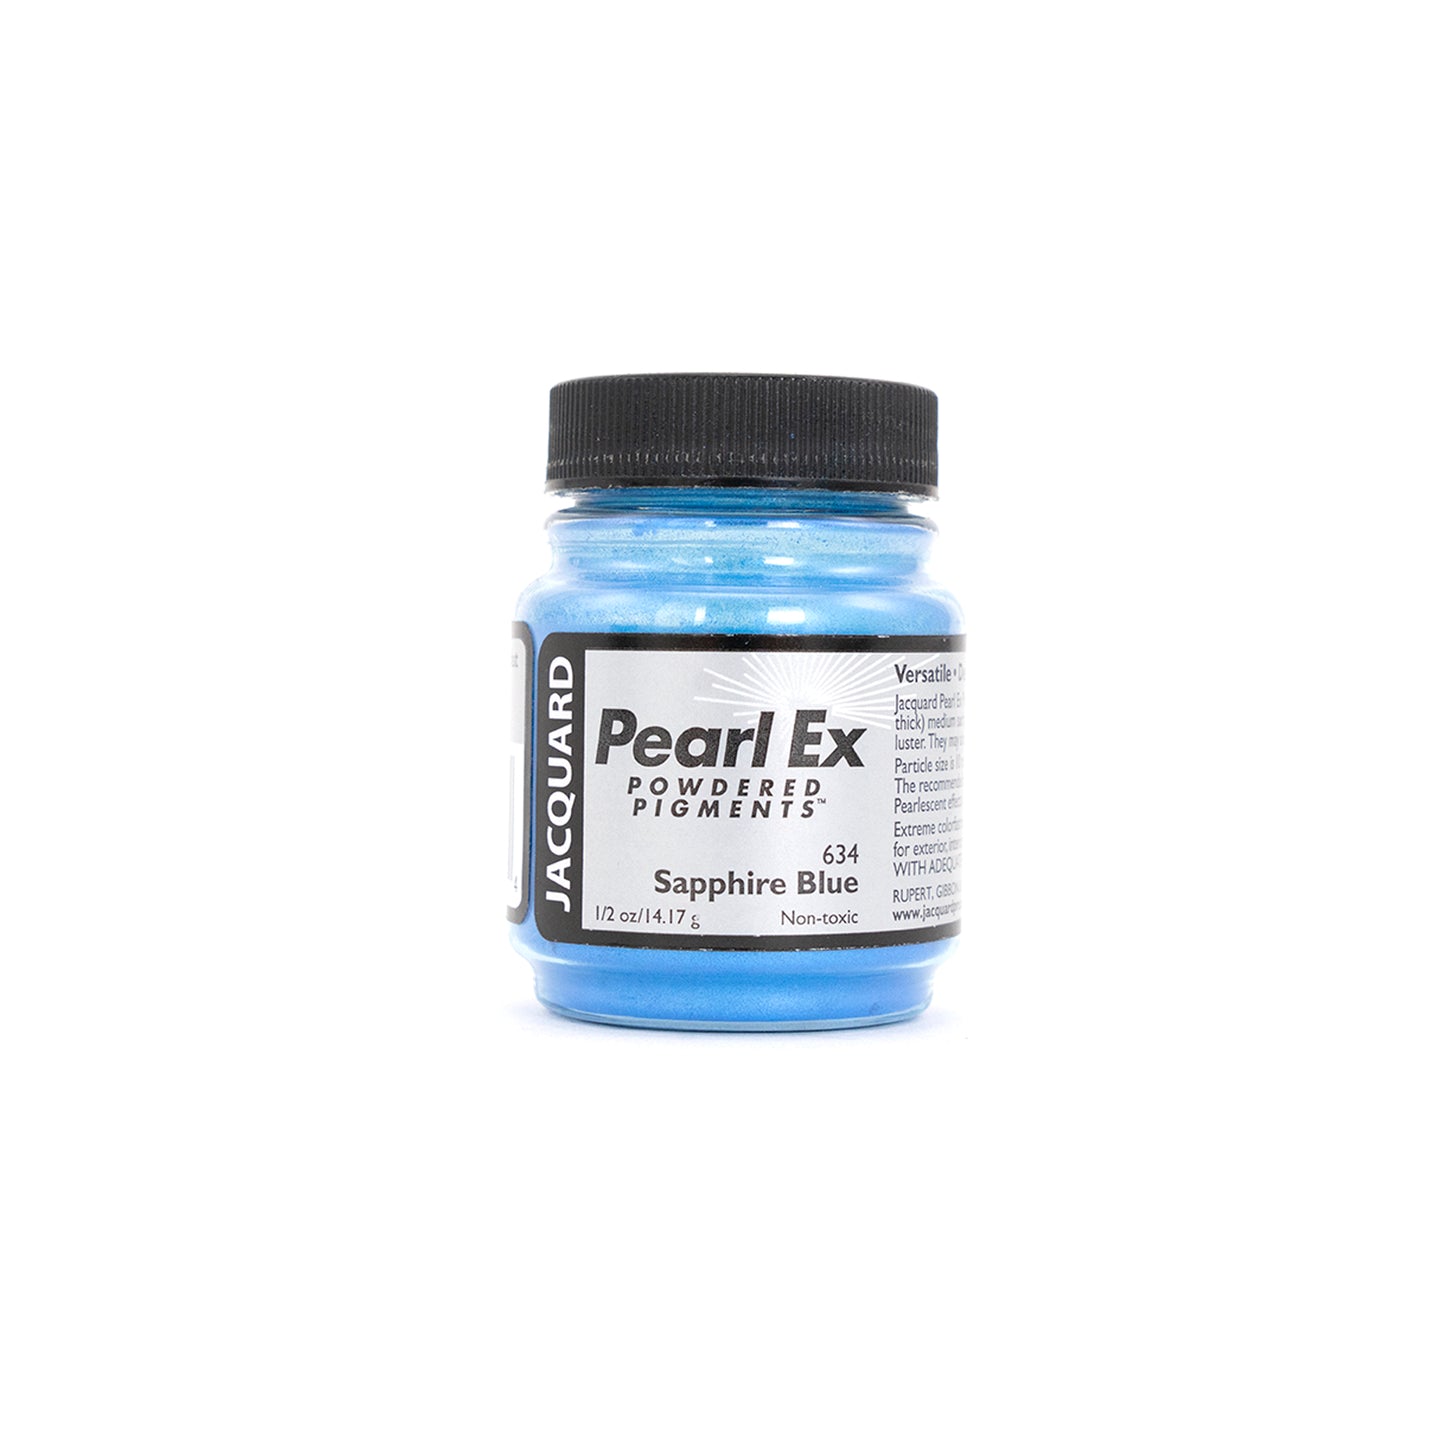 Jacquard PearlEx Powdered Pigments - 0.75 oz jars - Sapphire Blue by Jacquard - K. A. Artist Shop